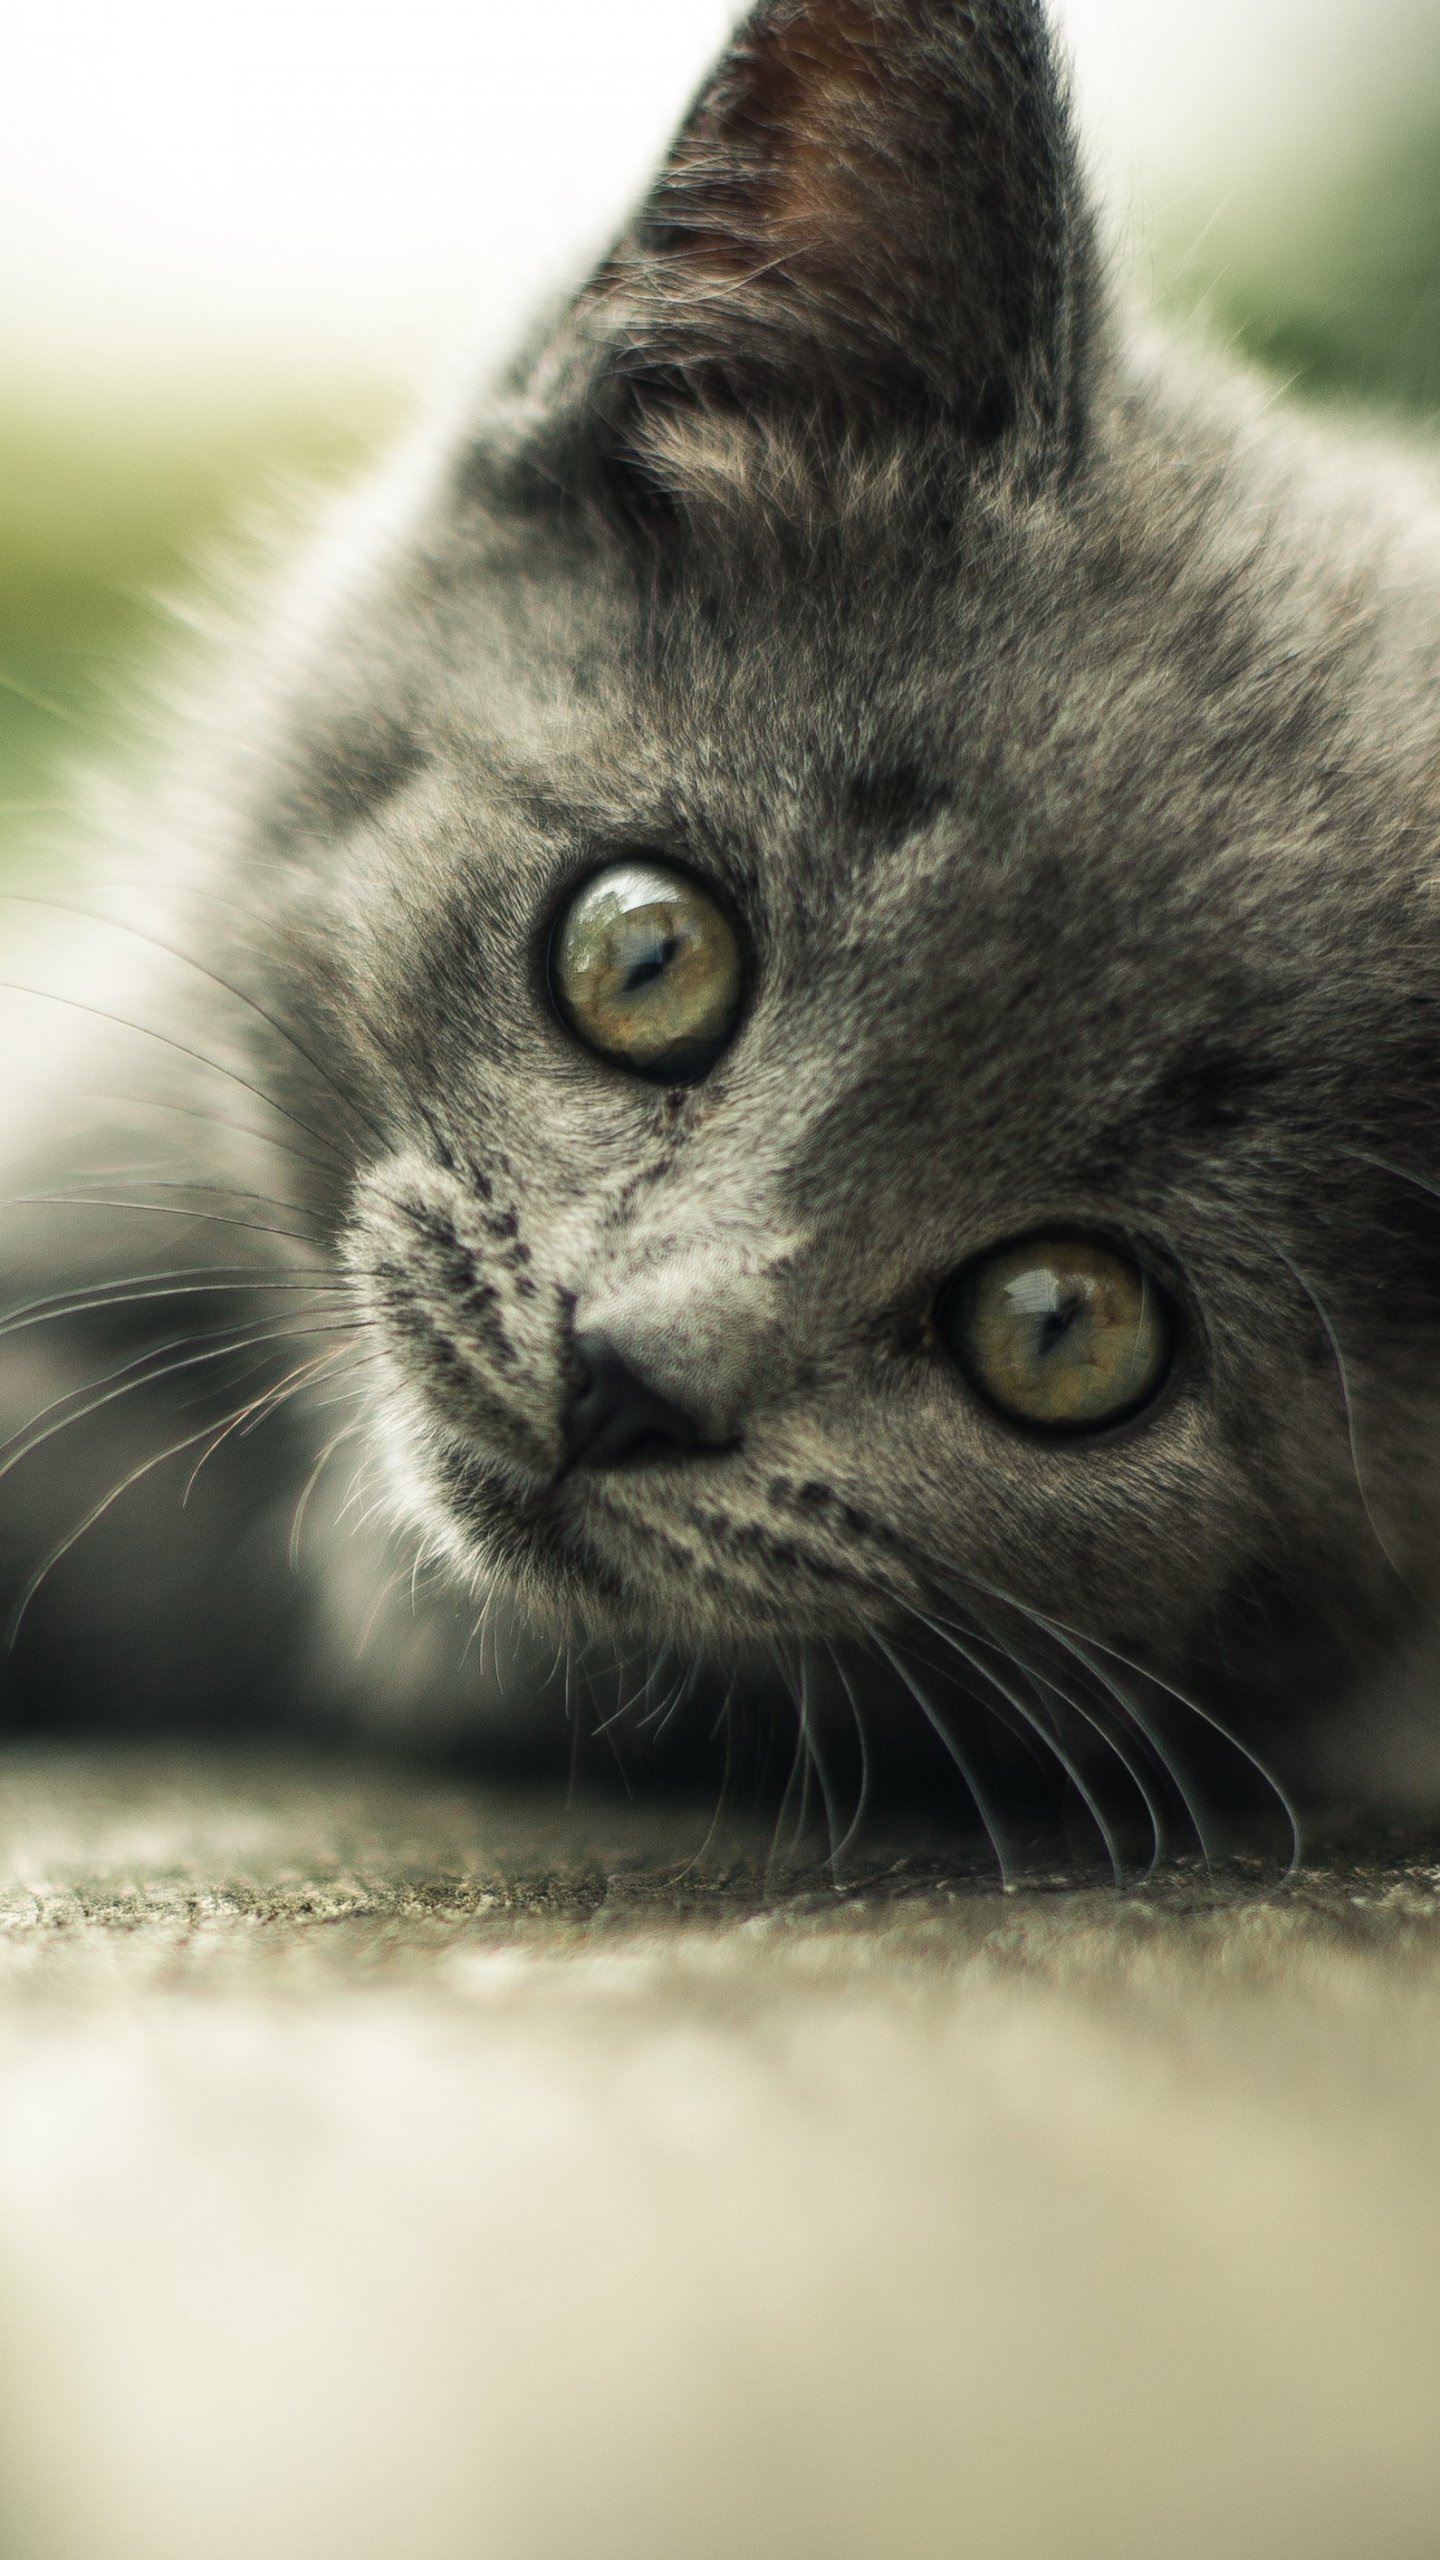 Gray Kitten Wallpaper - iPhone, Android & Desktop Backgrounds